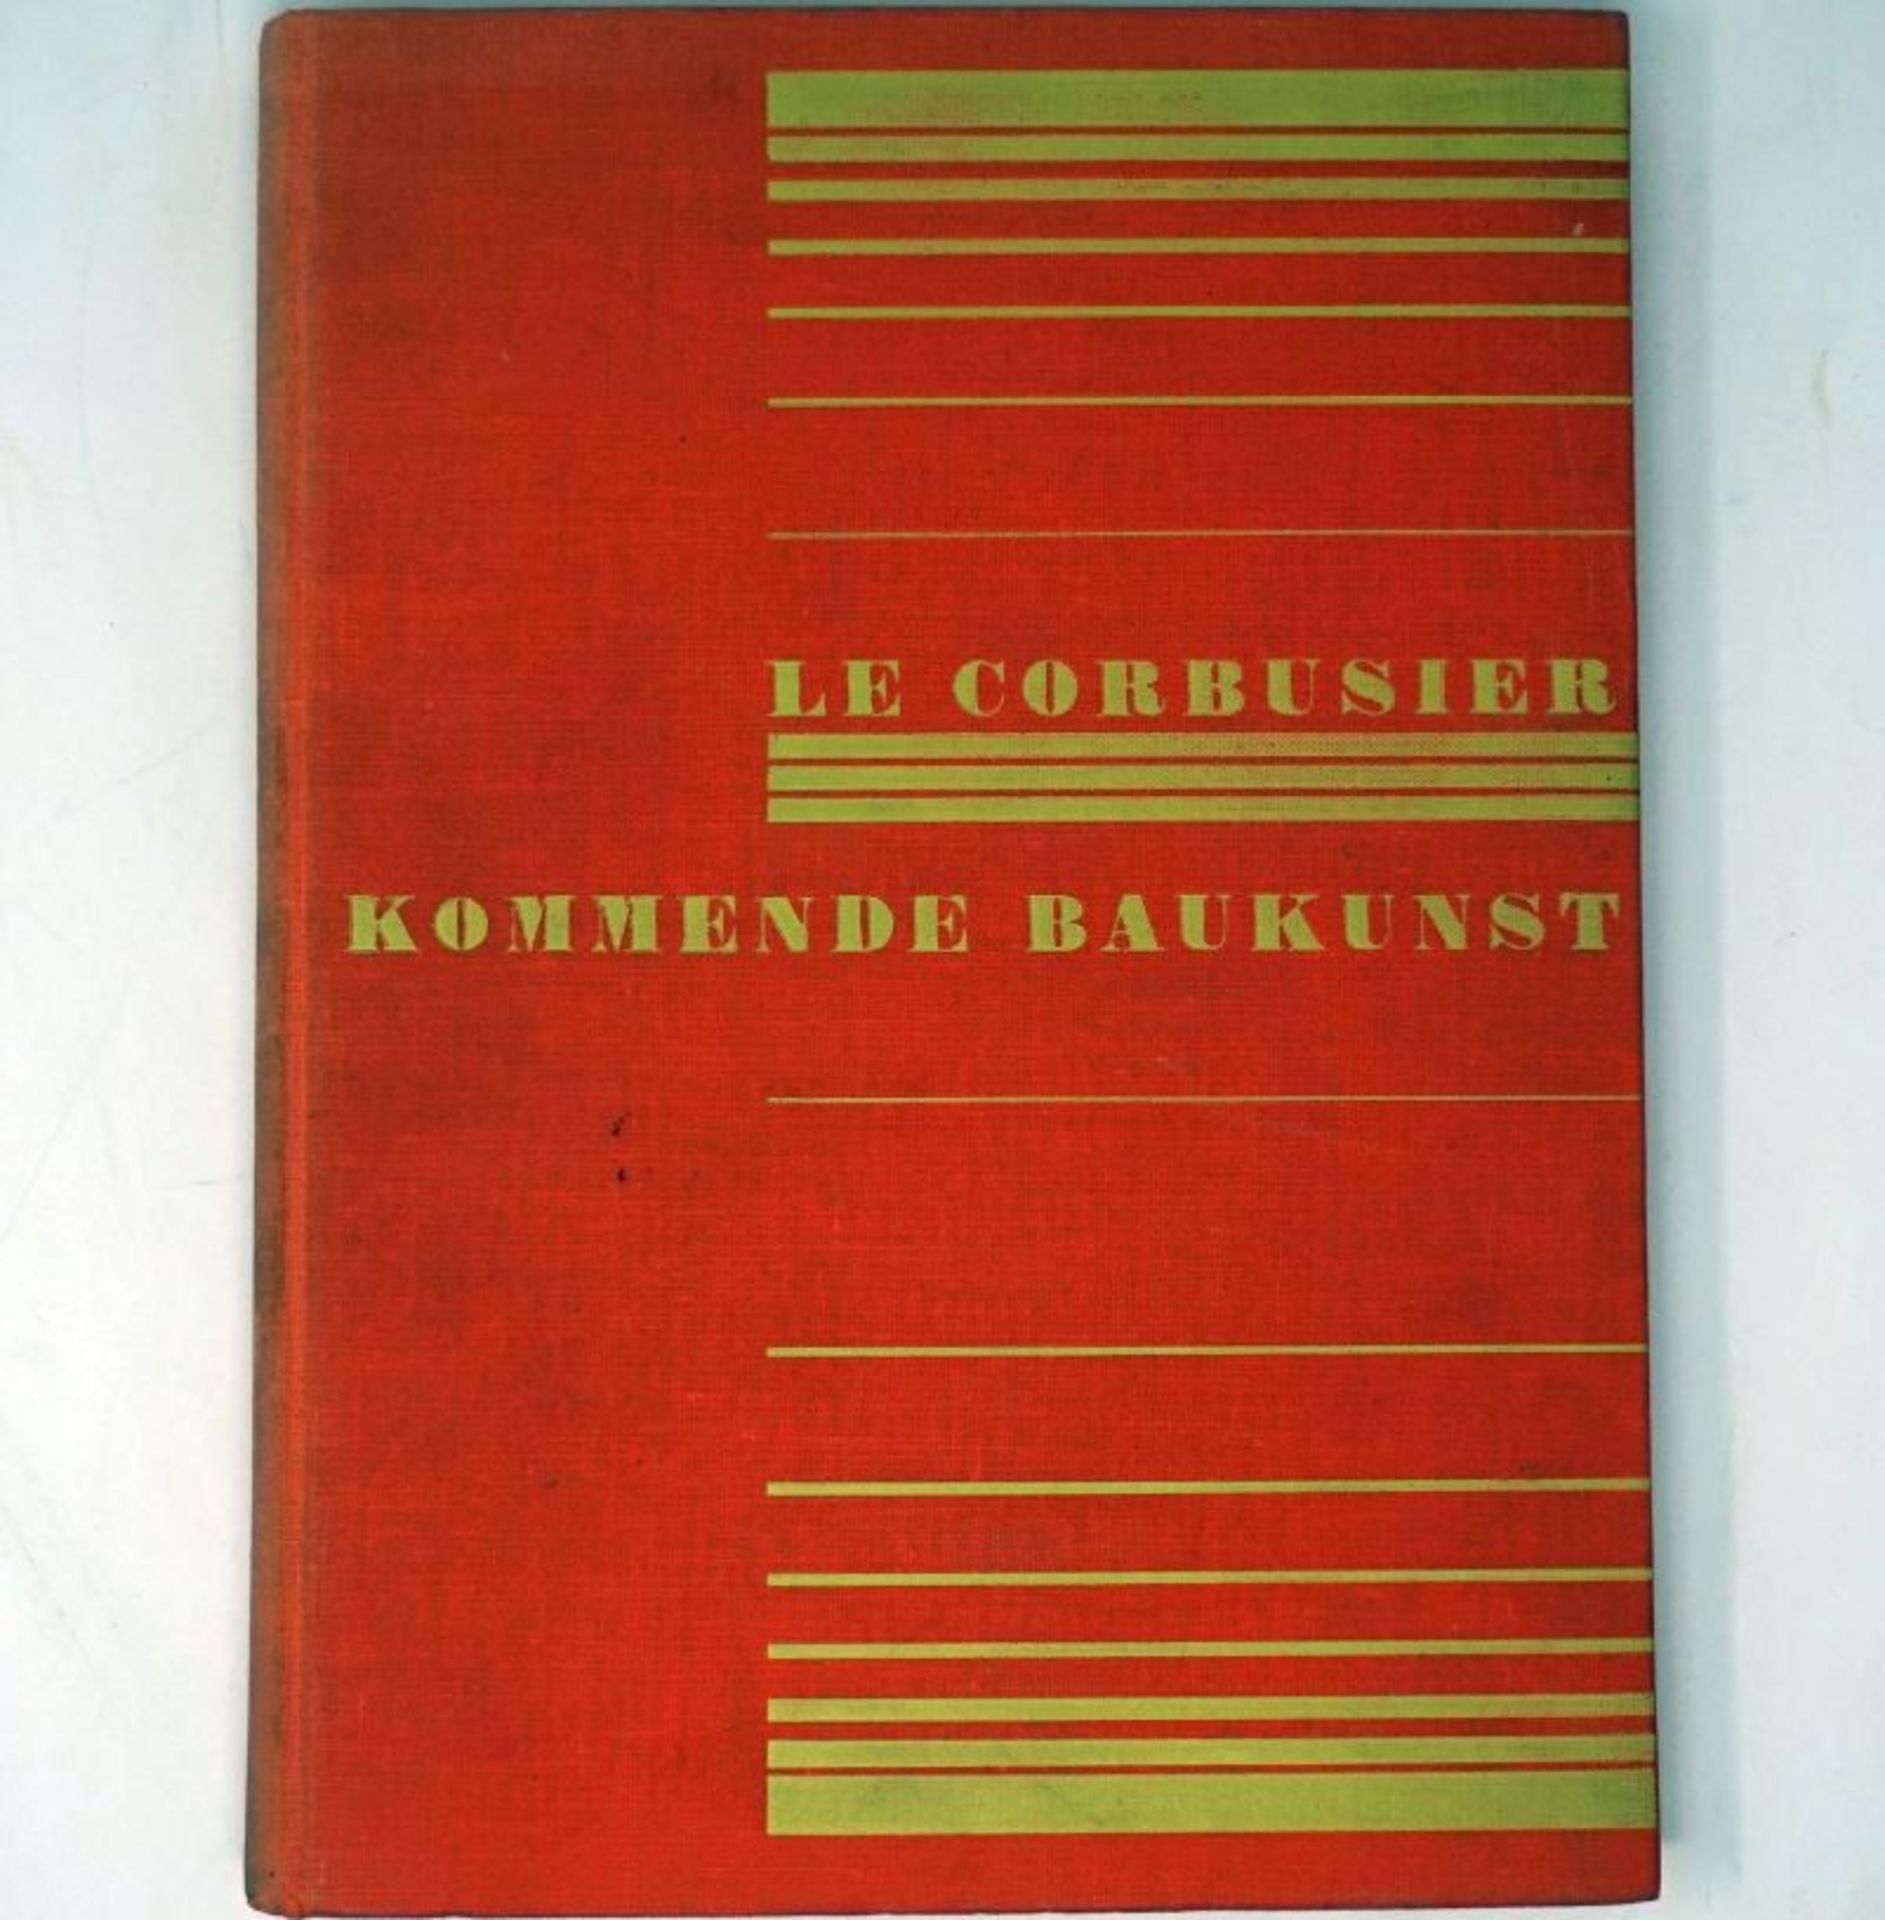 Le Corbusier: Kommende Baukunst